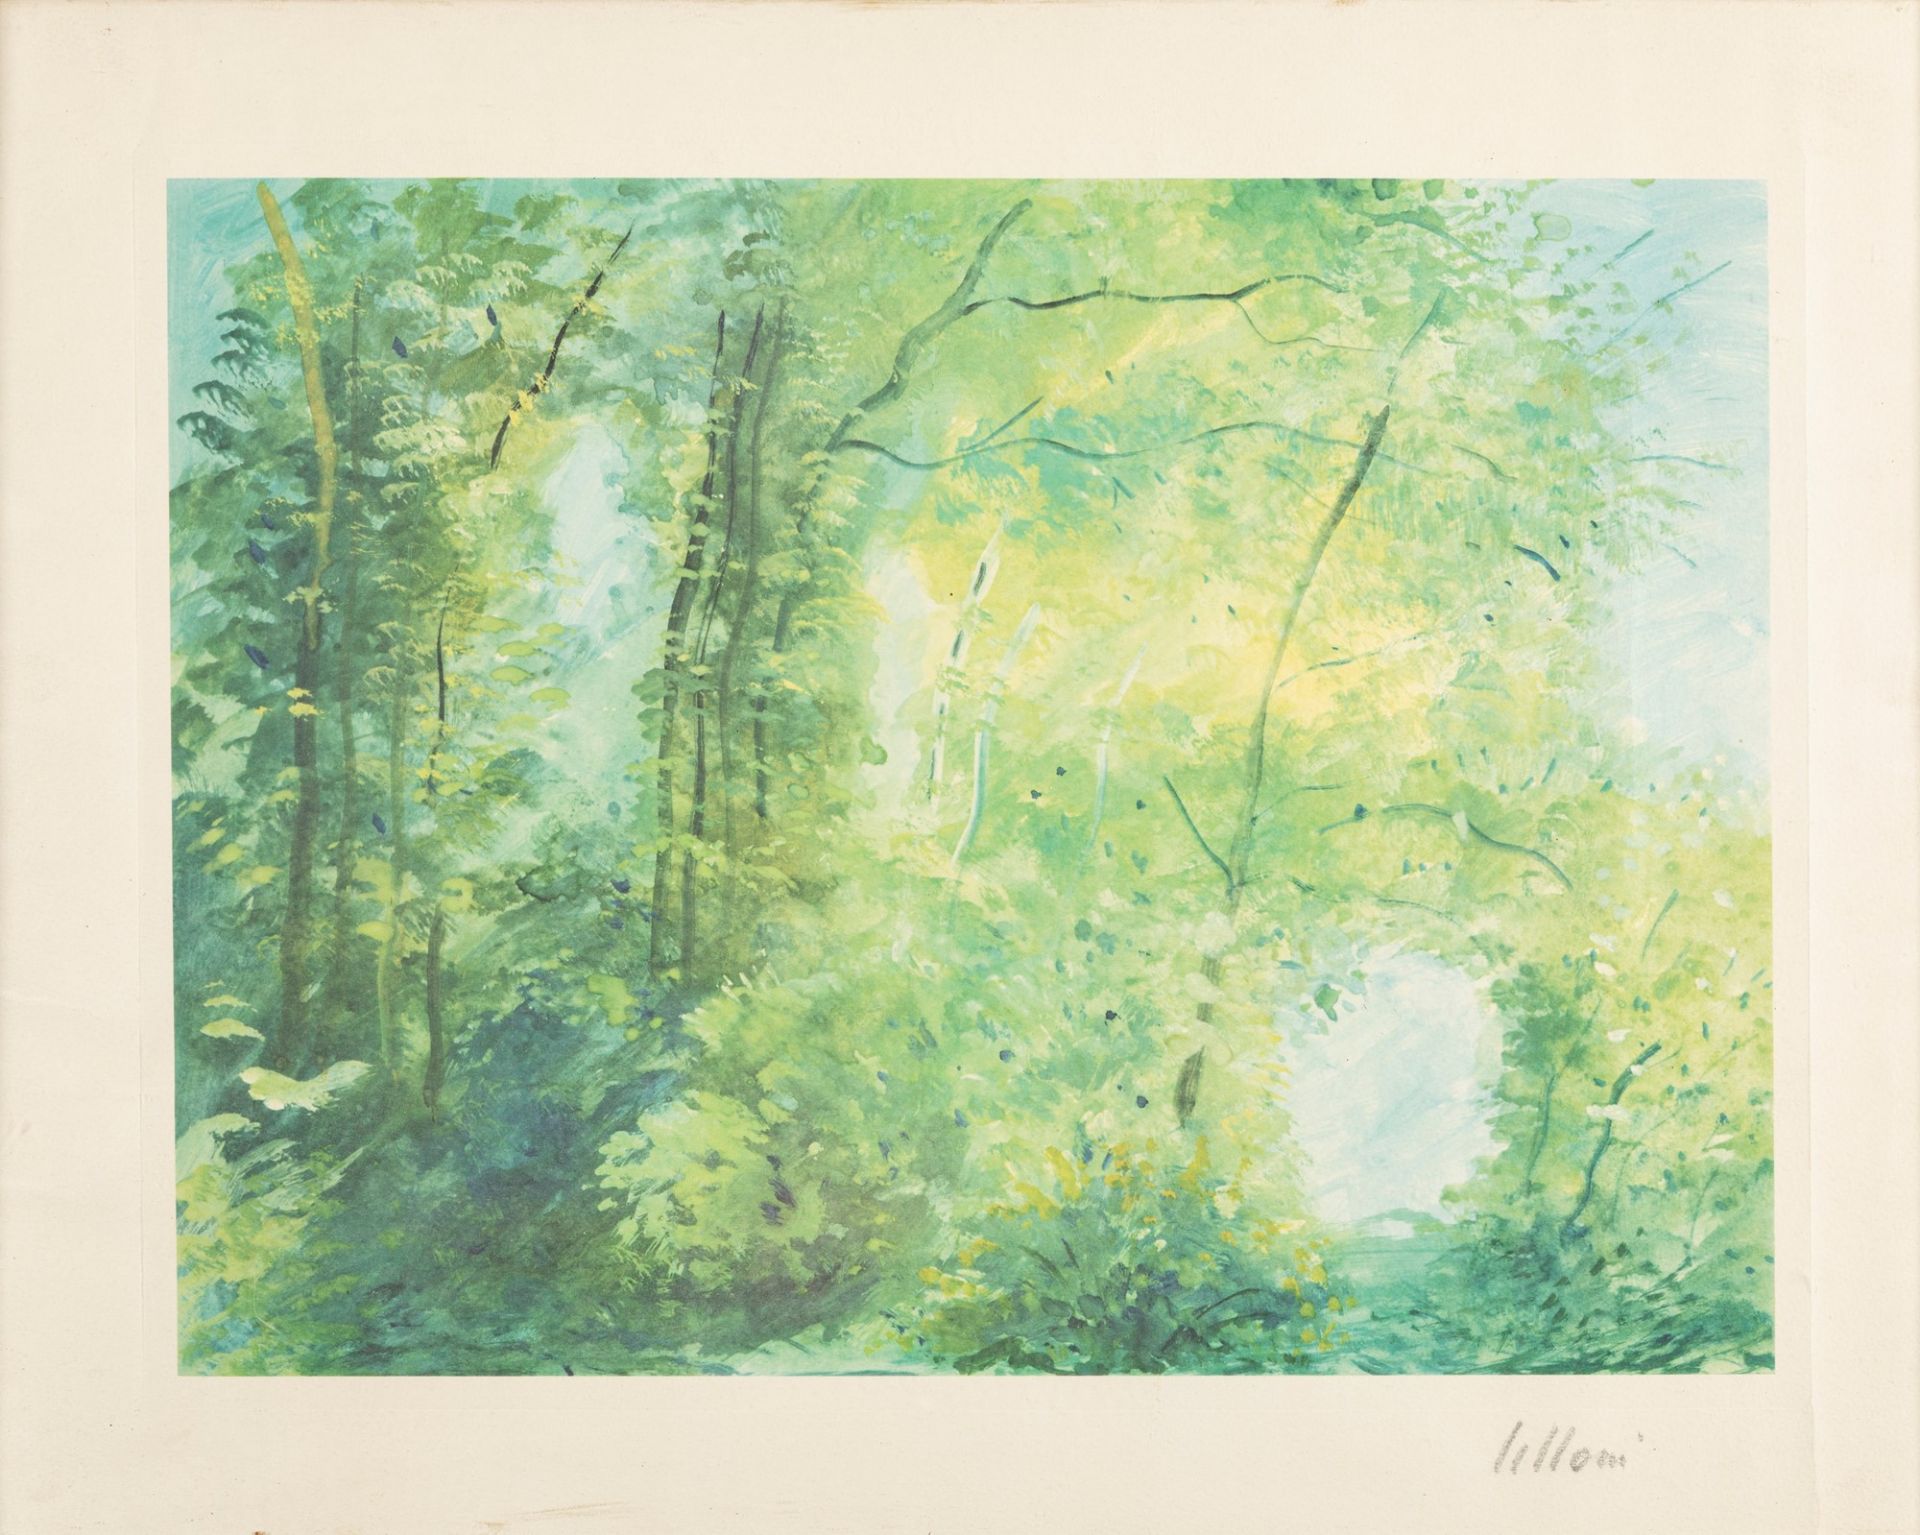 Umberto Lilloni (Milano 1898-1980) - Woods